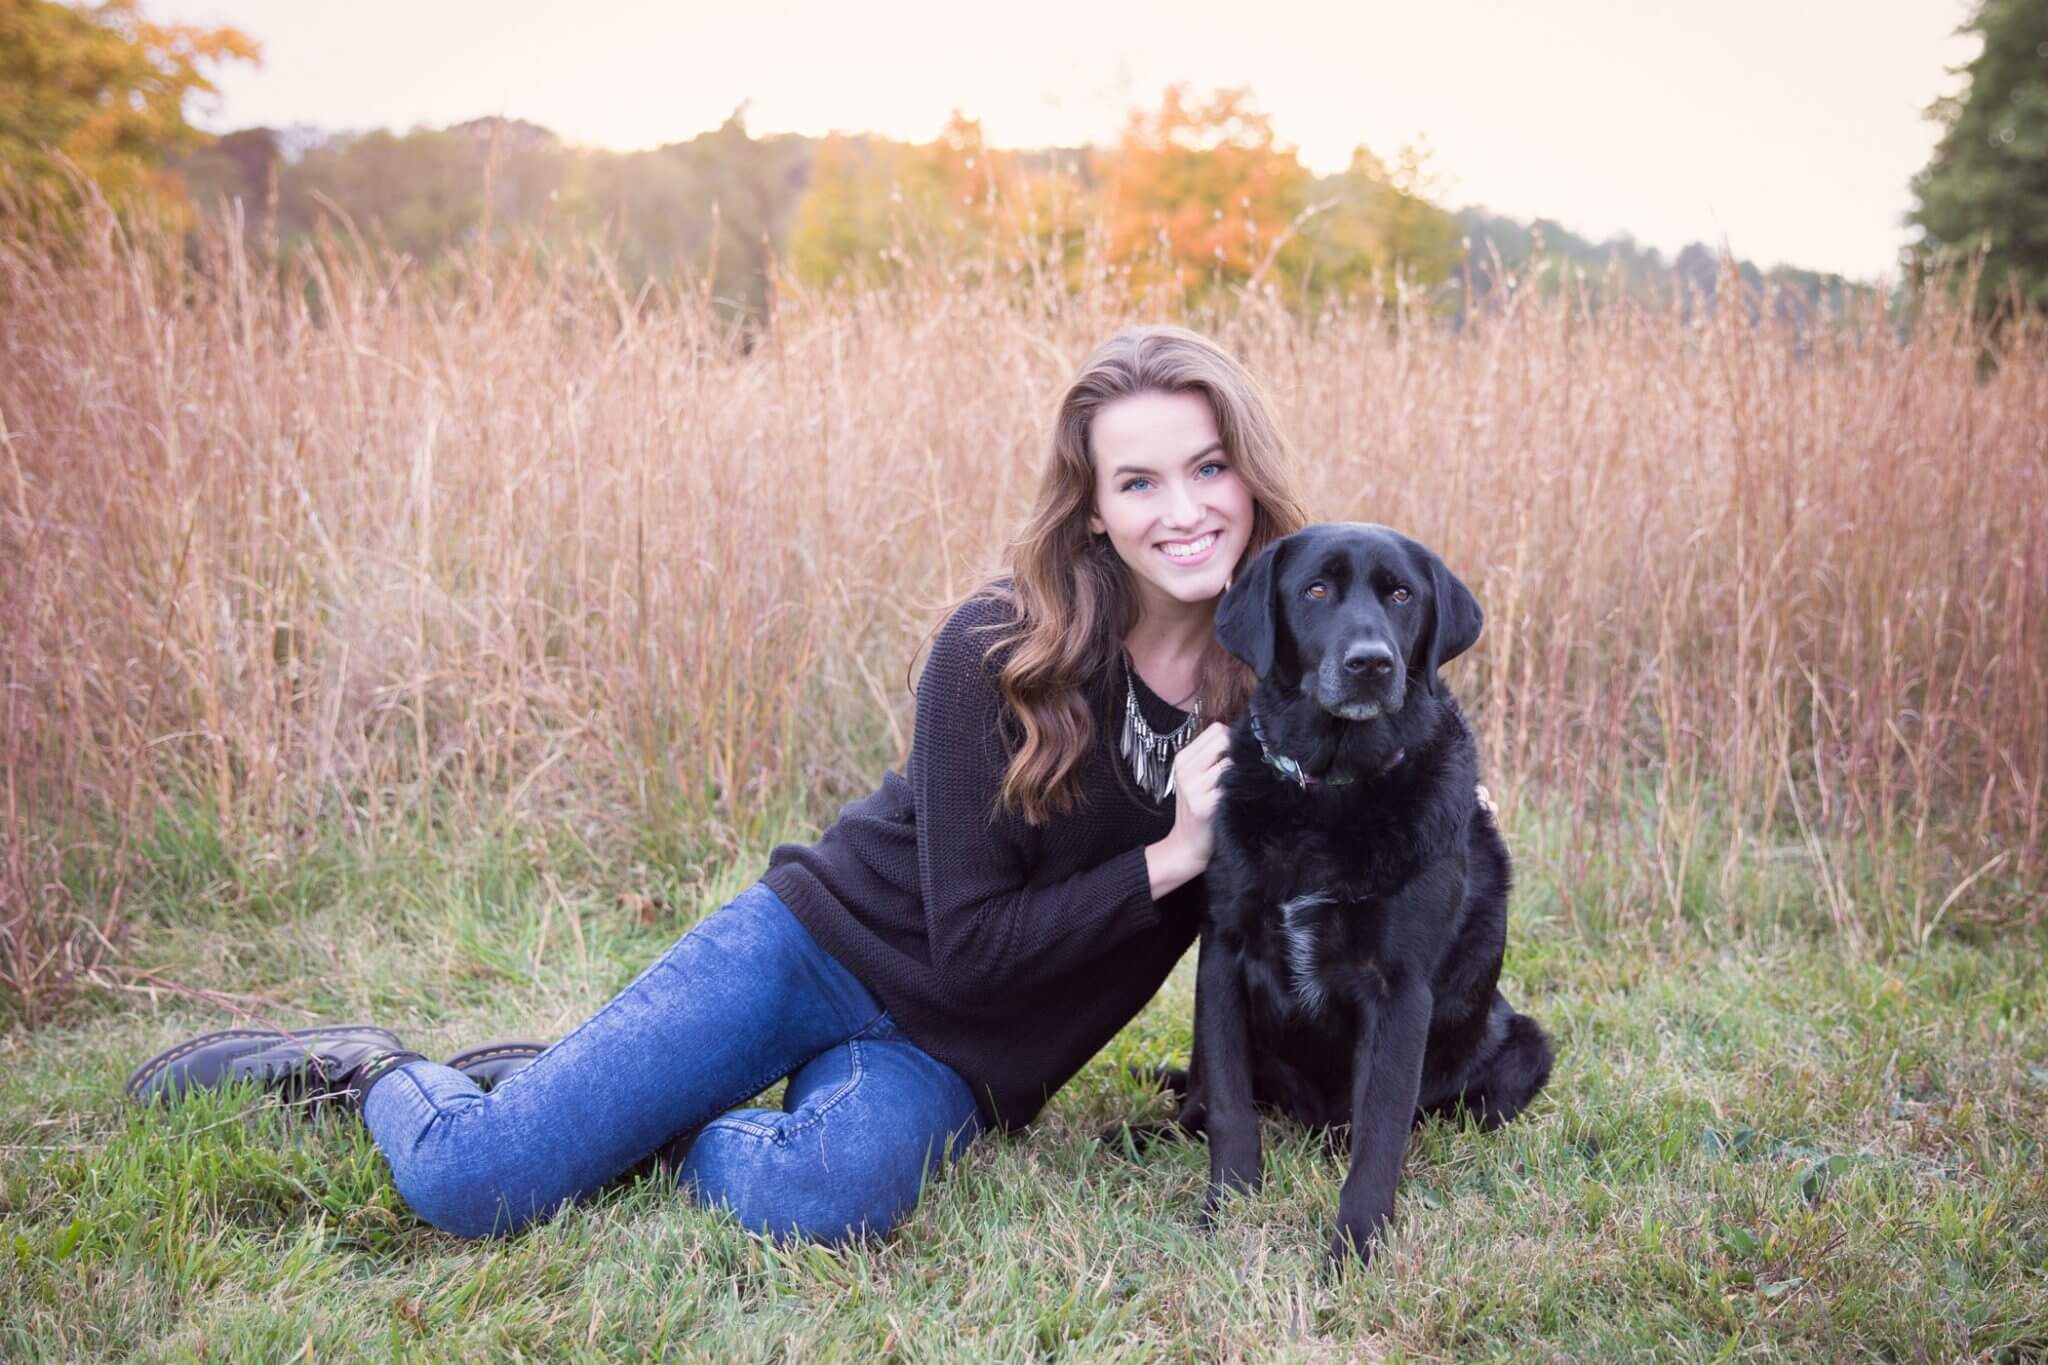 pittsburgh senior portrait in field with black lab dog